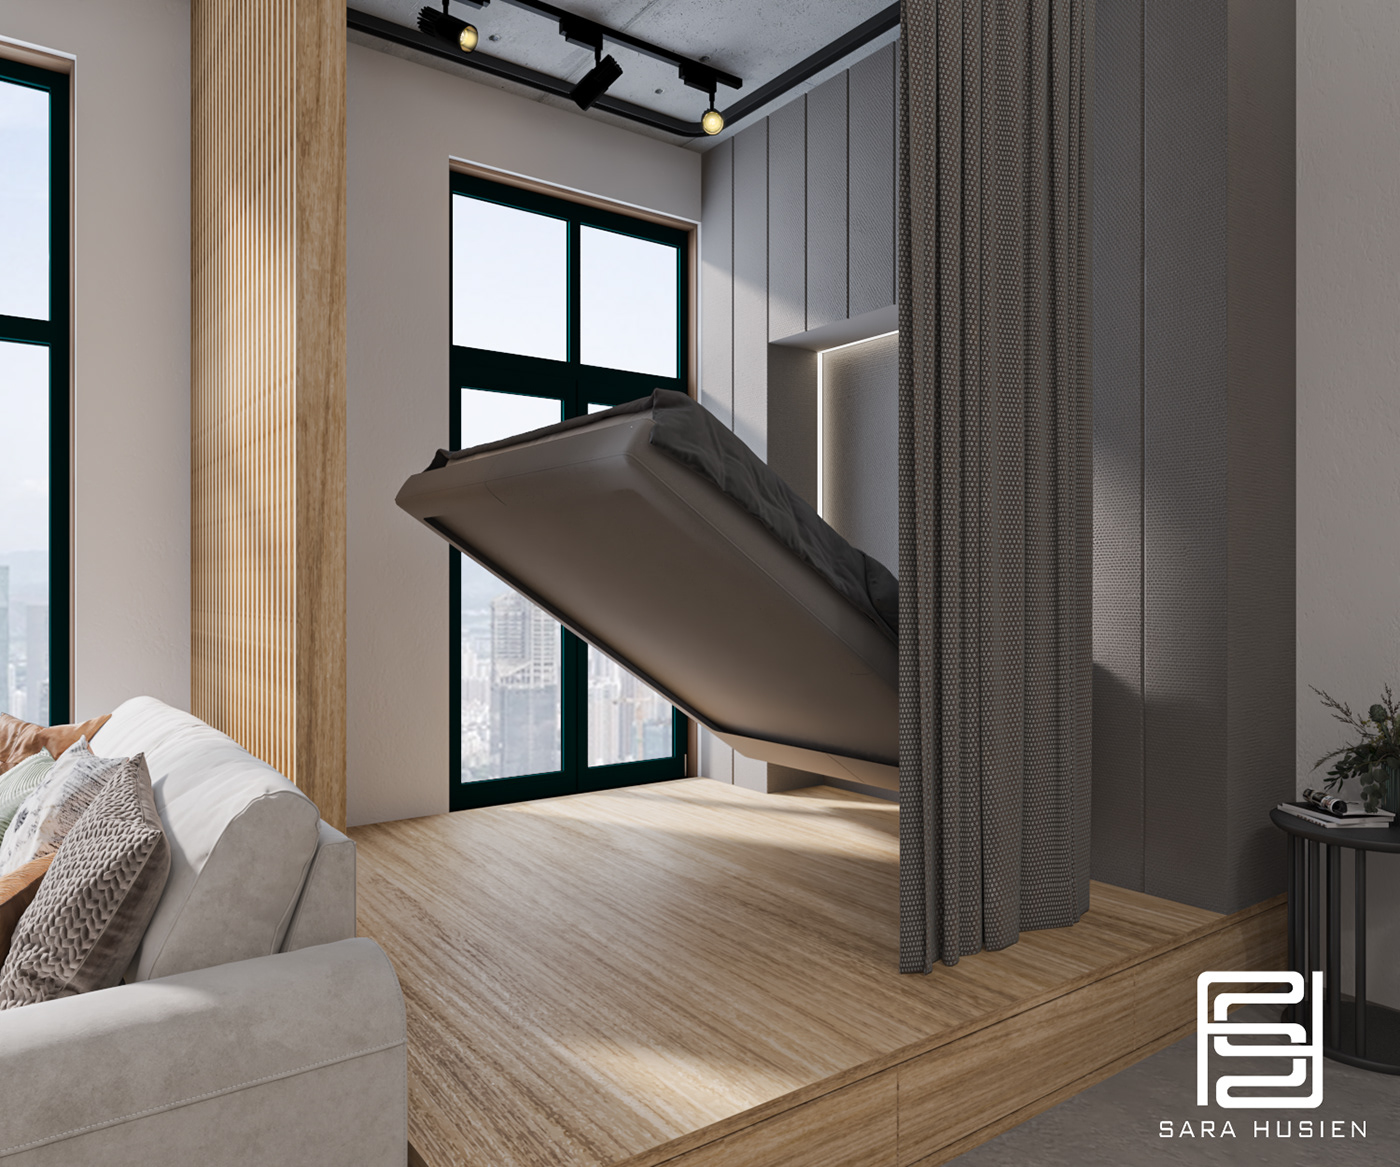 3ds max apartment modern Luxury Design vray Render bedroom living room kitchen design sunlight